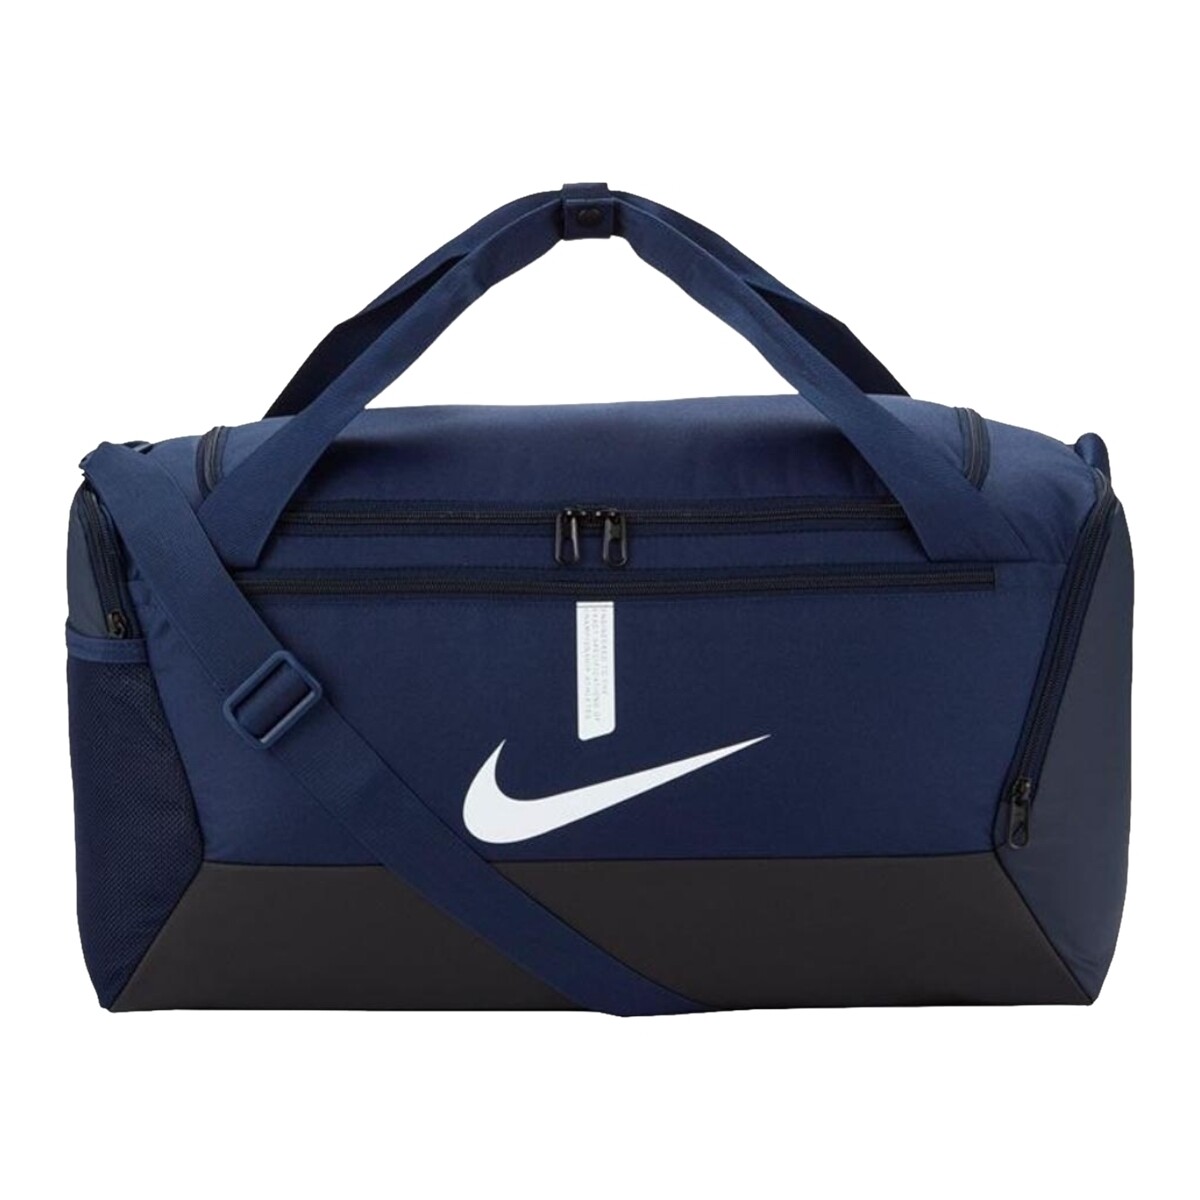 Taška Sportovní tašky Nike Academy Team Modrá